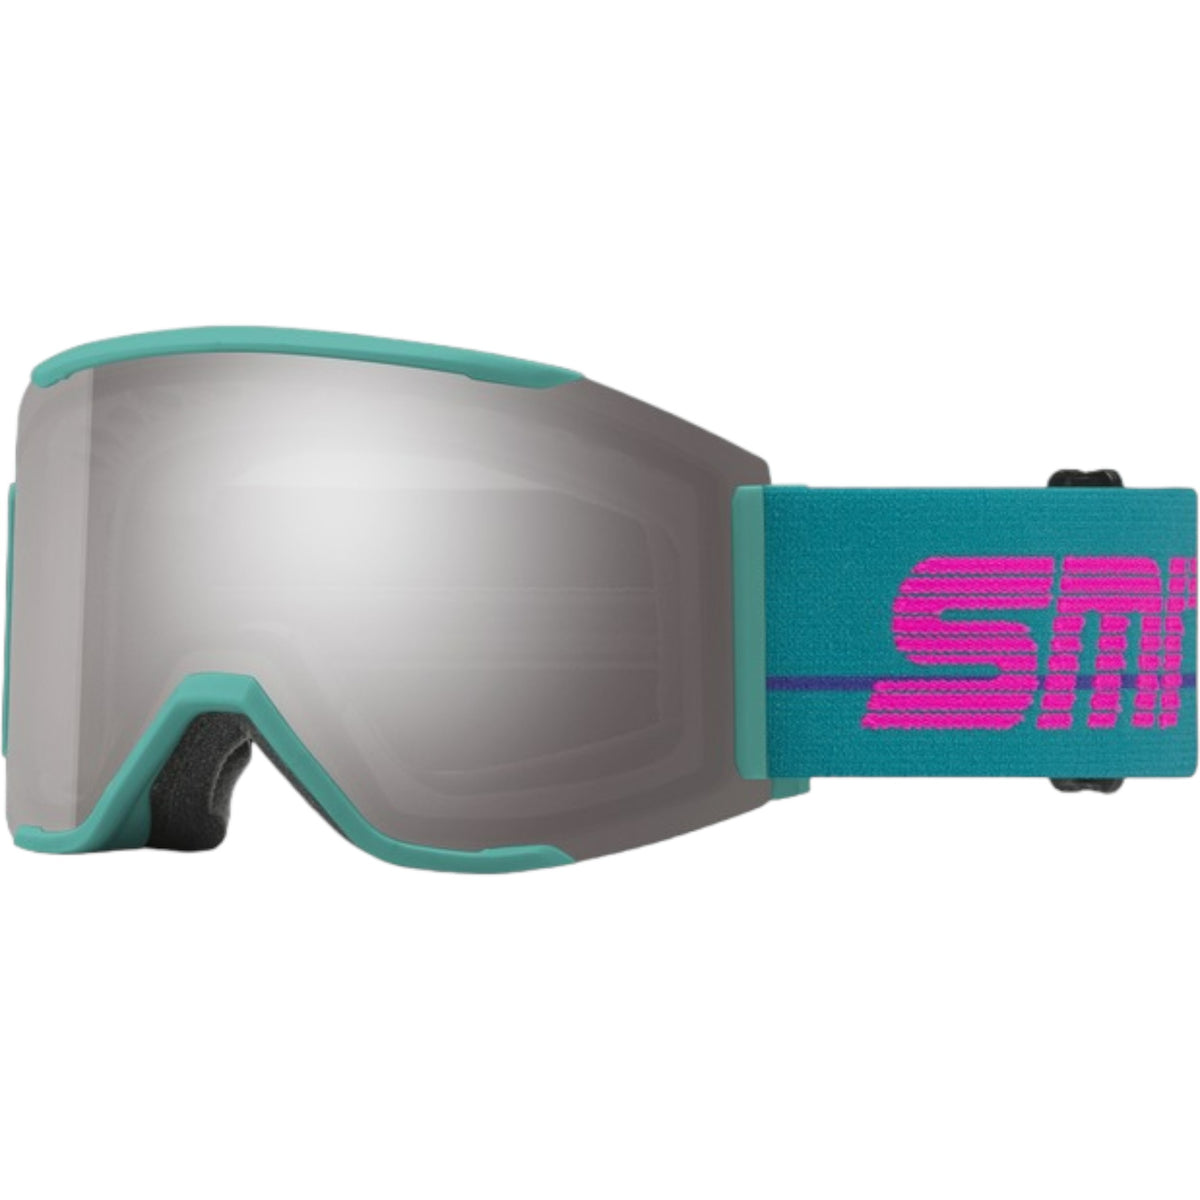 Squad MAG Adult Ski Goggles